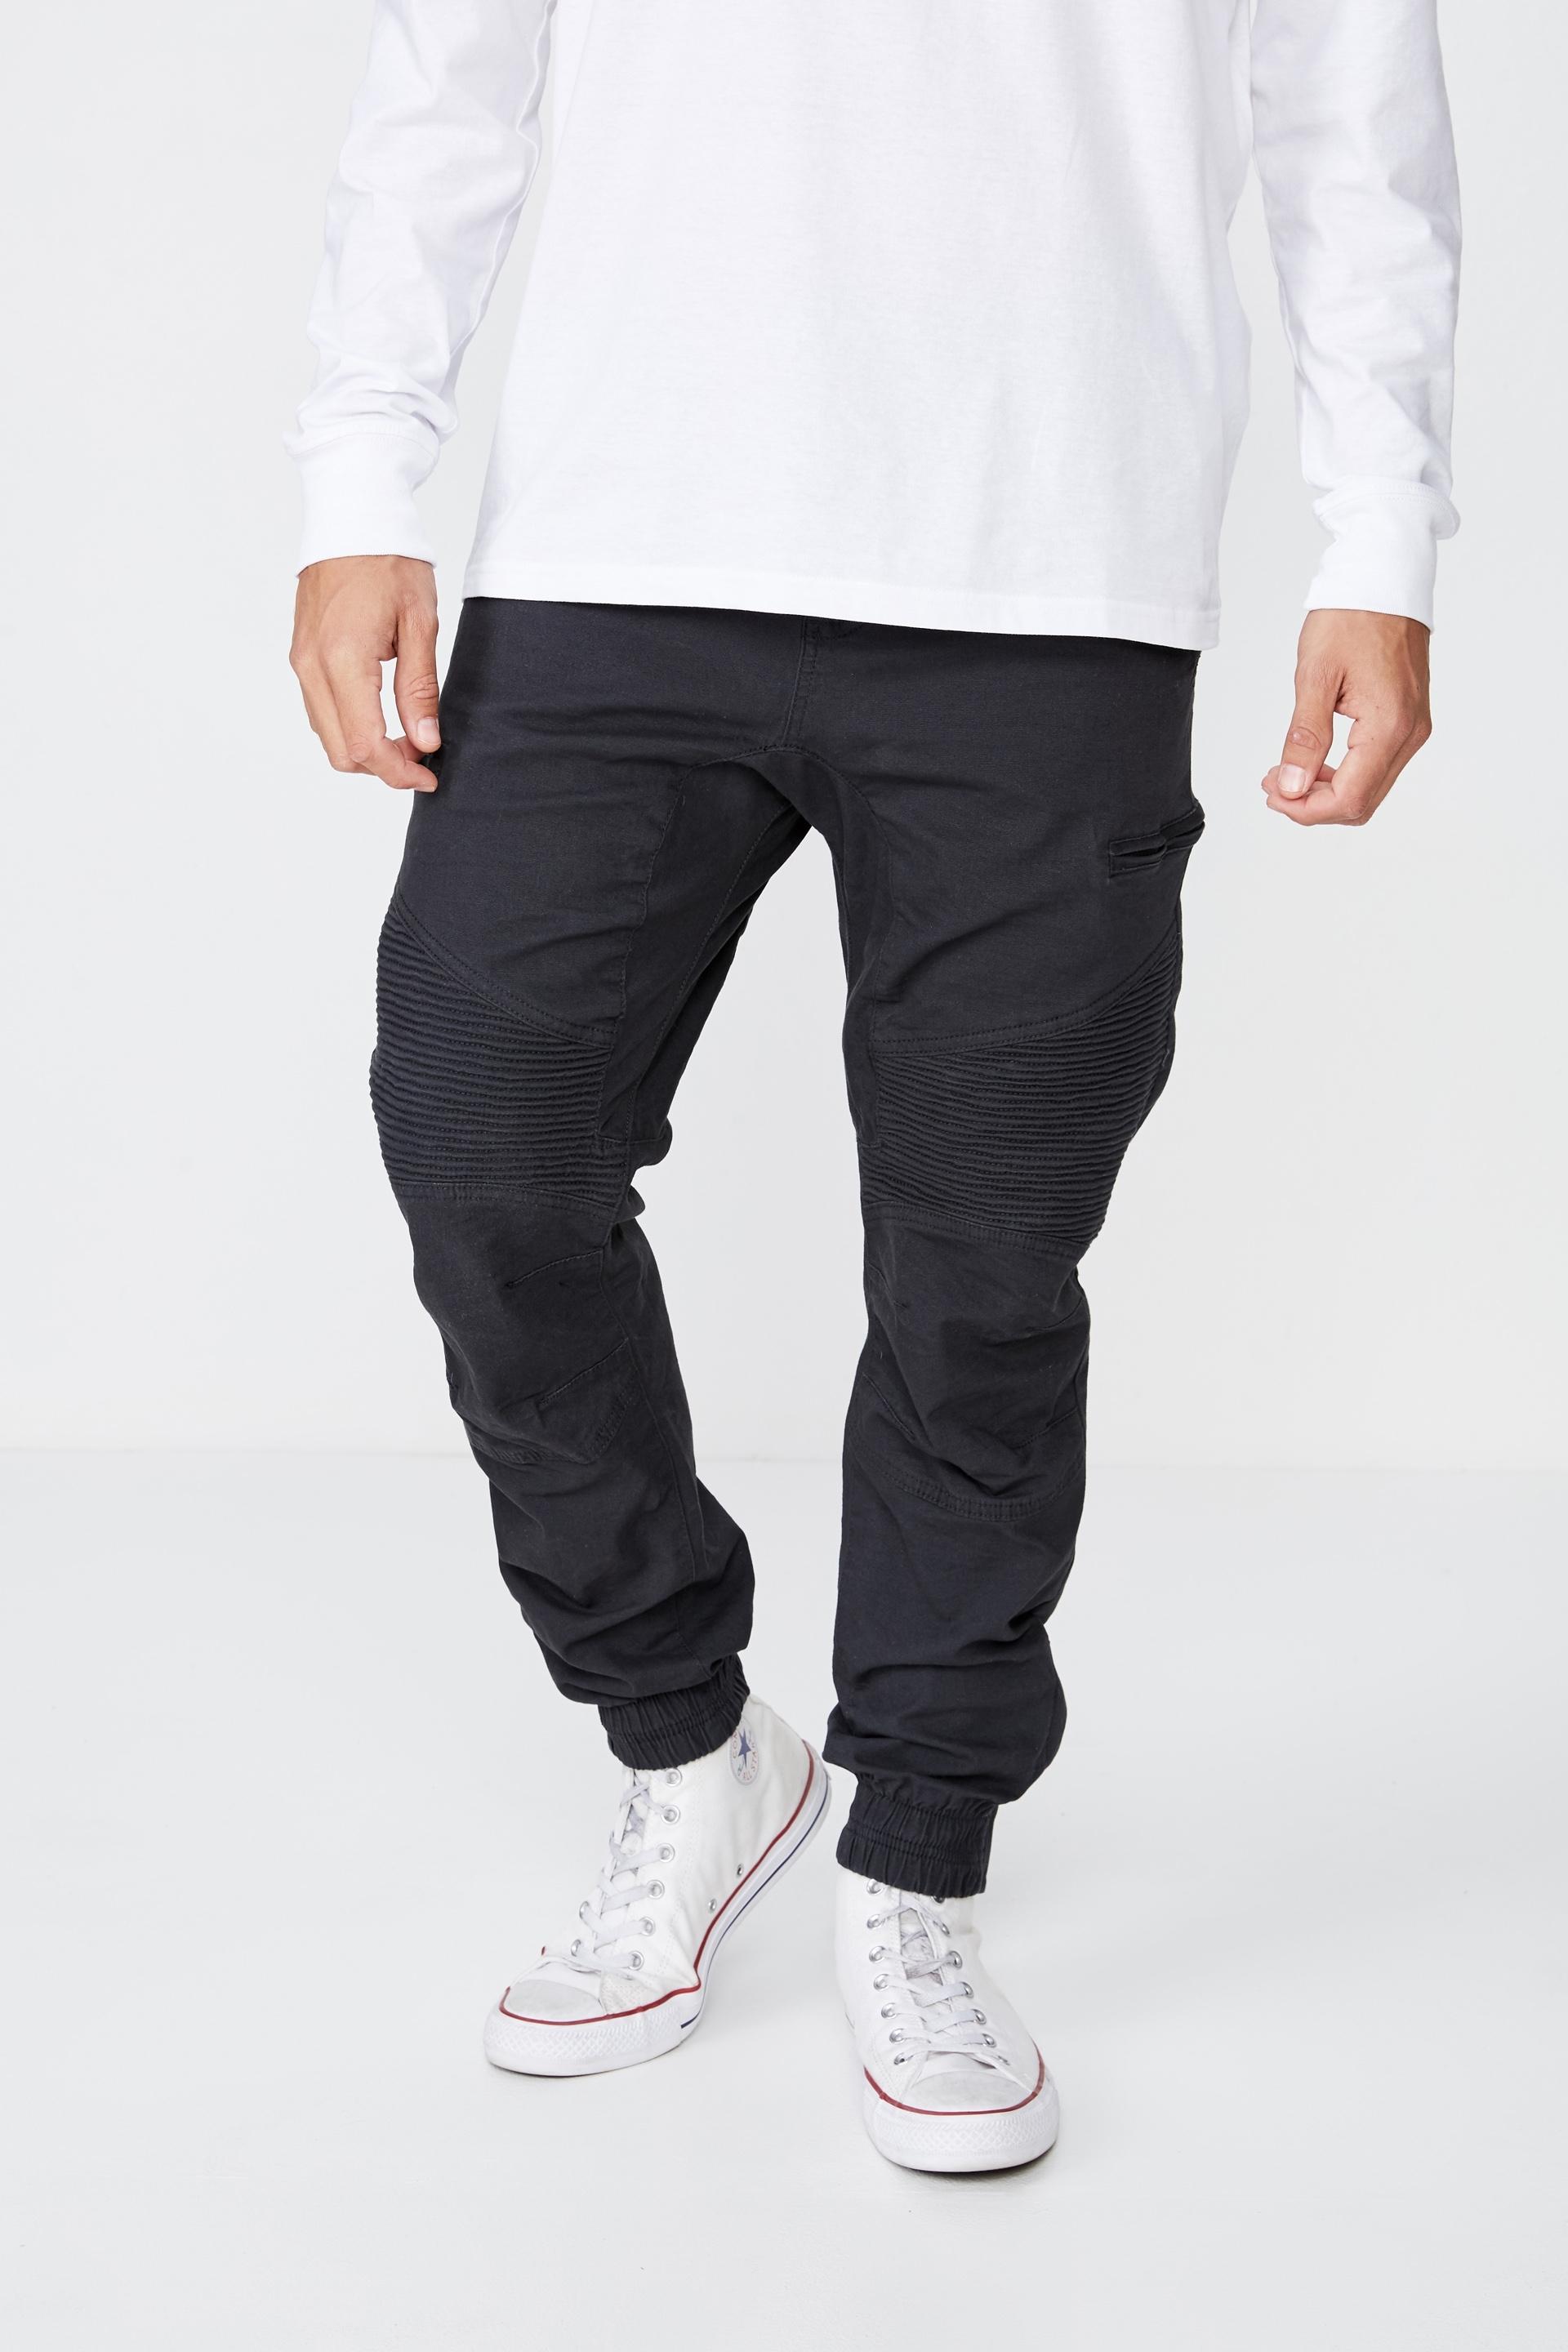 Urban jogger- jet black Cotton On Pants & Chinos | Superbalist.com